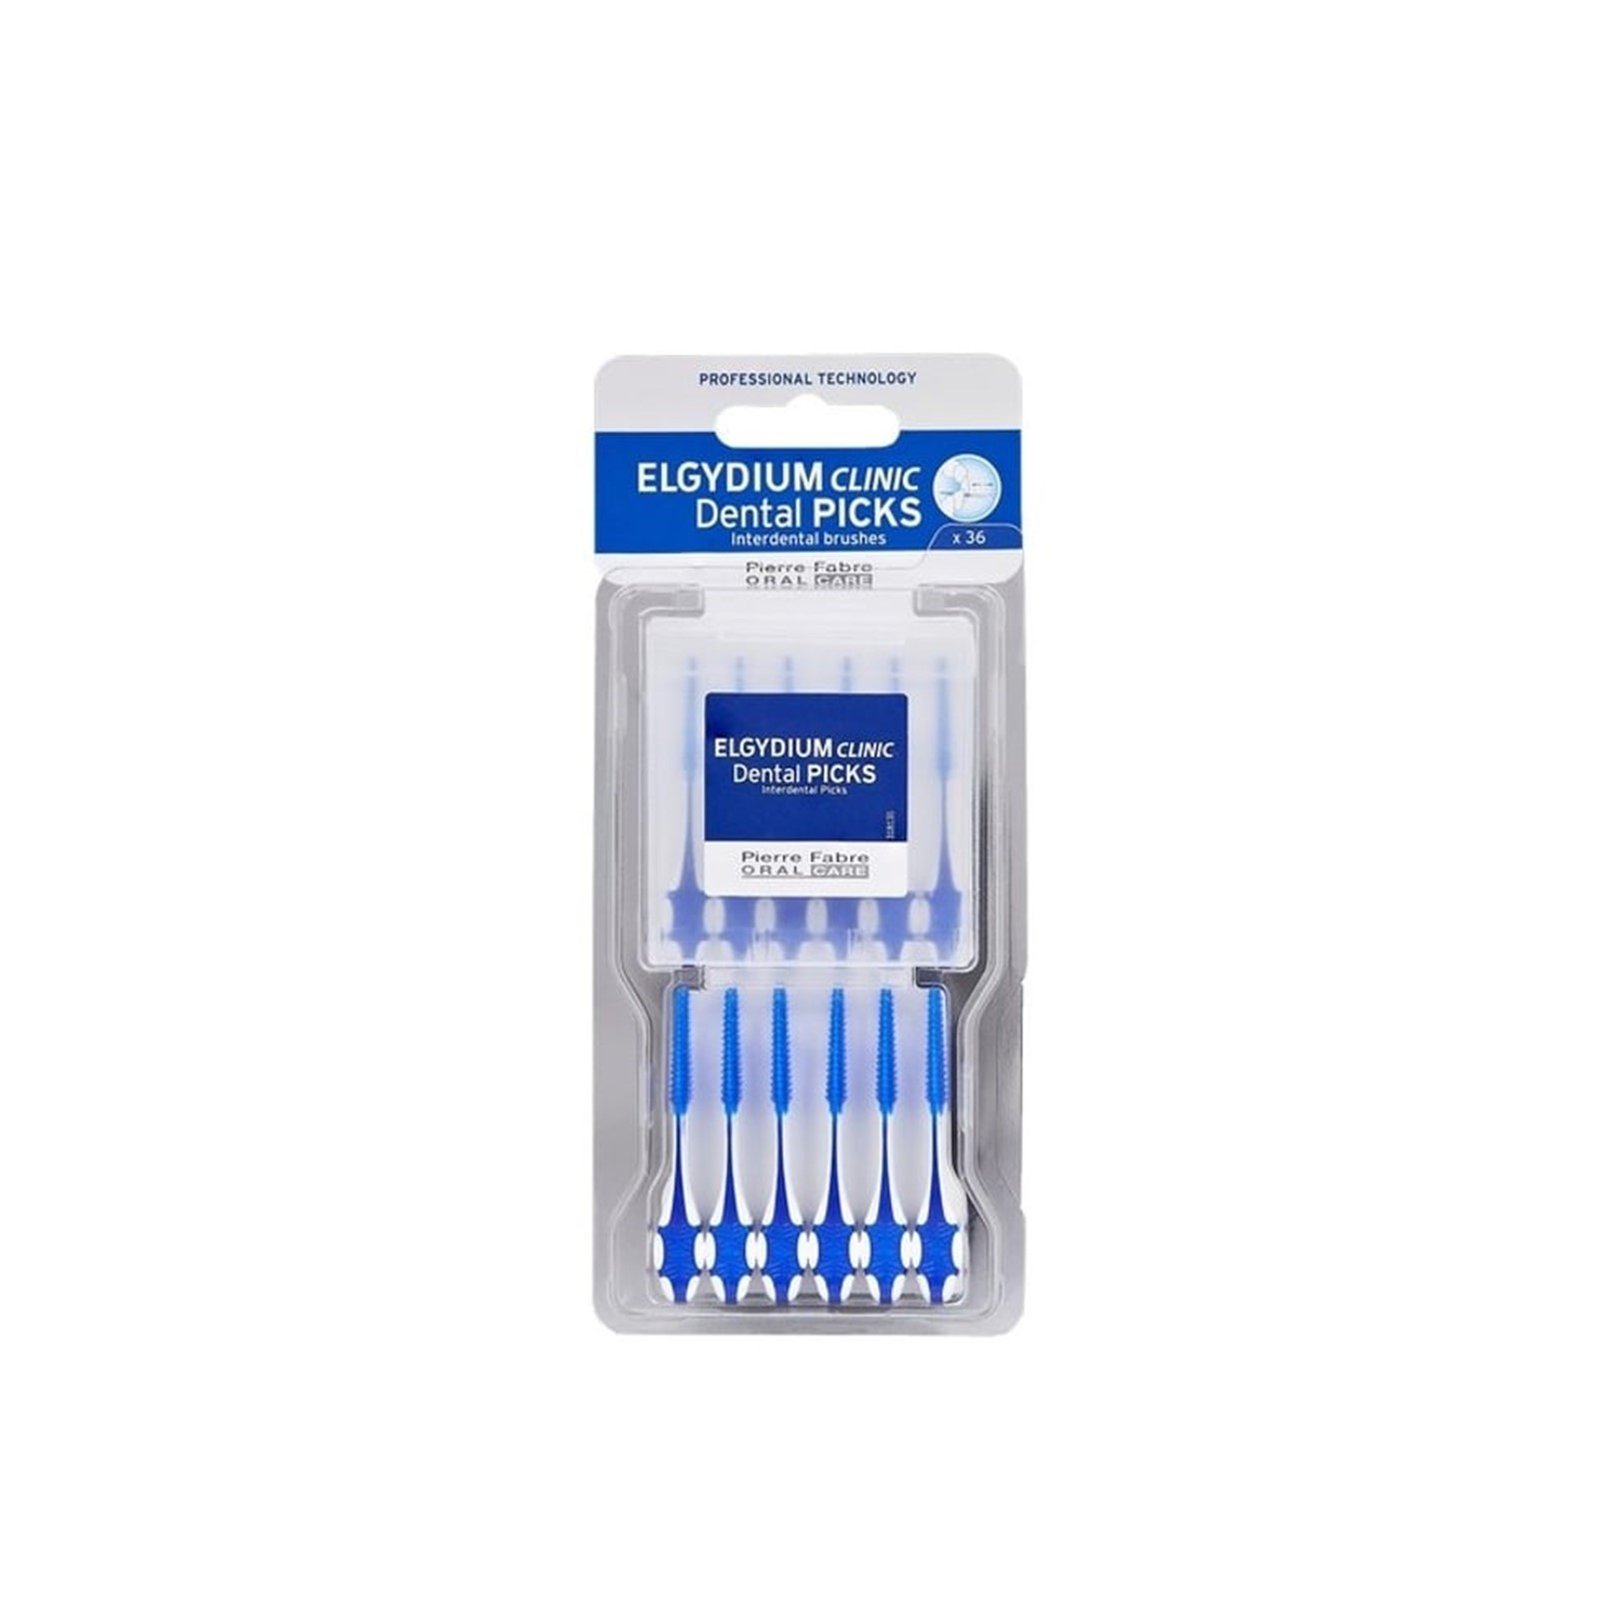 Elgydium Clinic Dental Picks Interdental Brushes x36